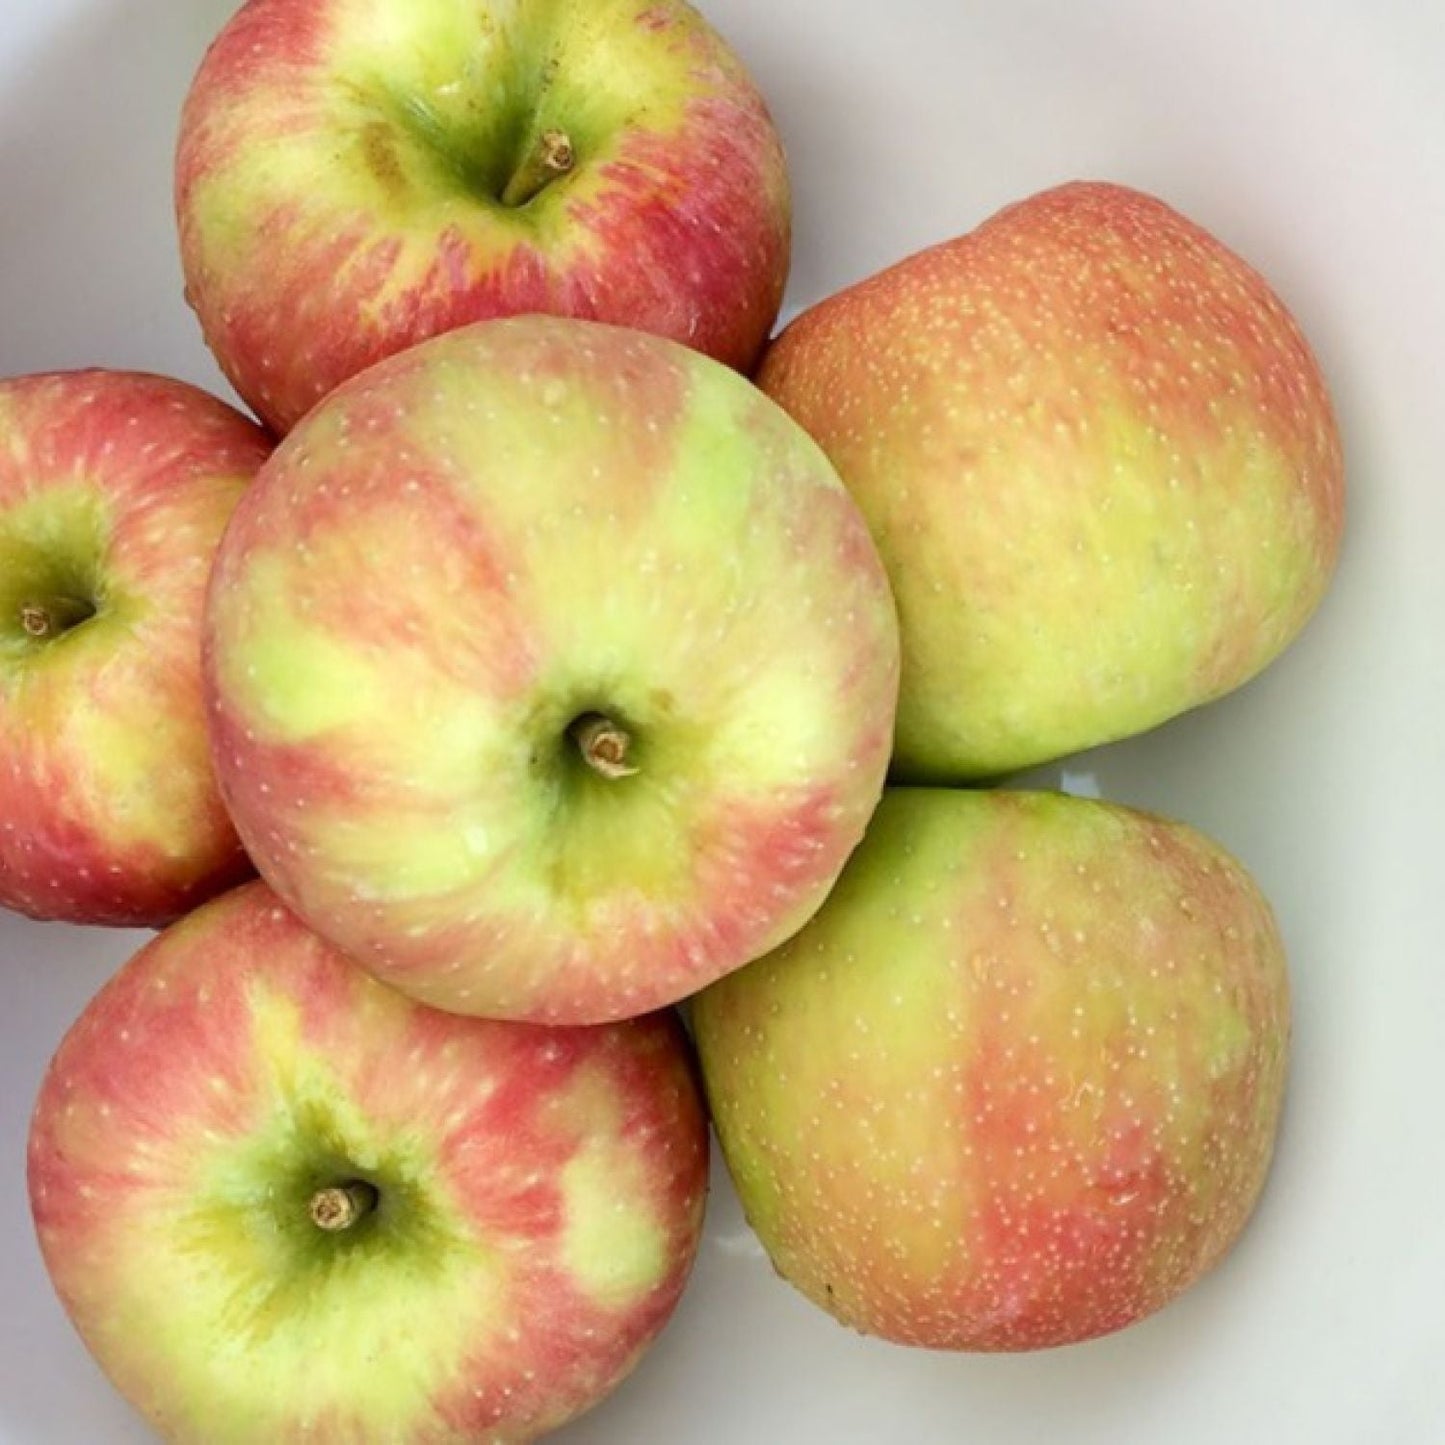 Organic Jazz apples